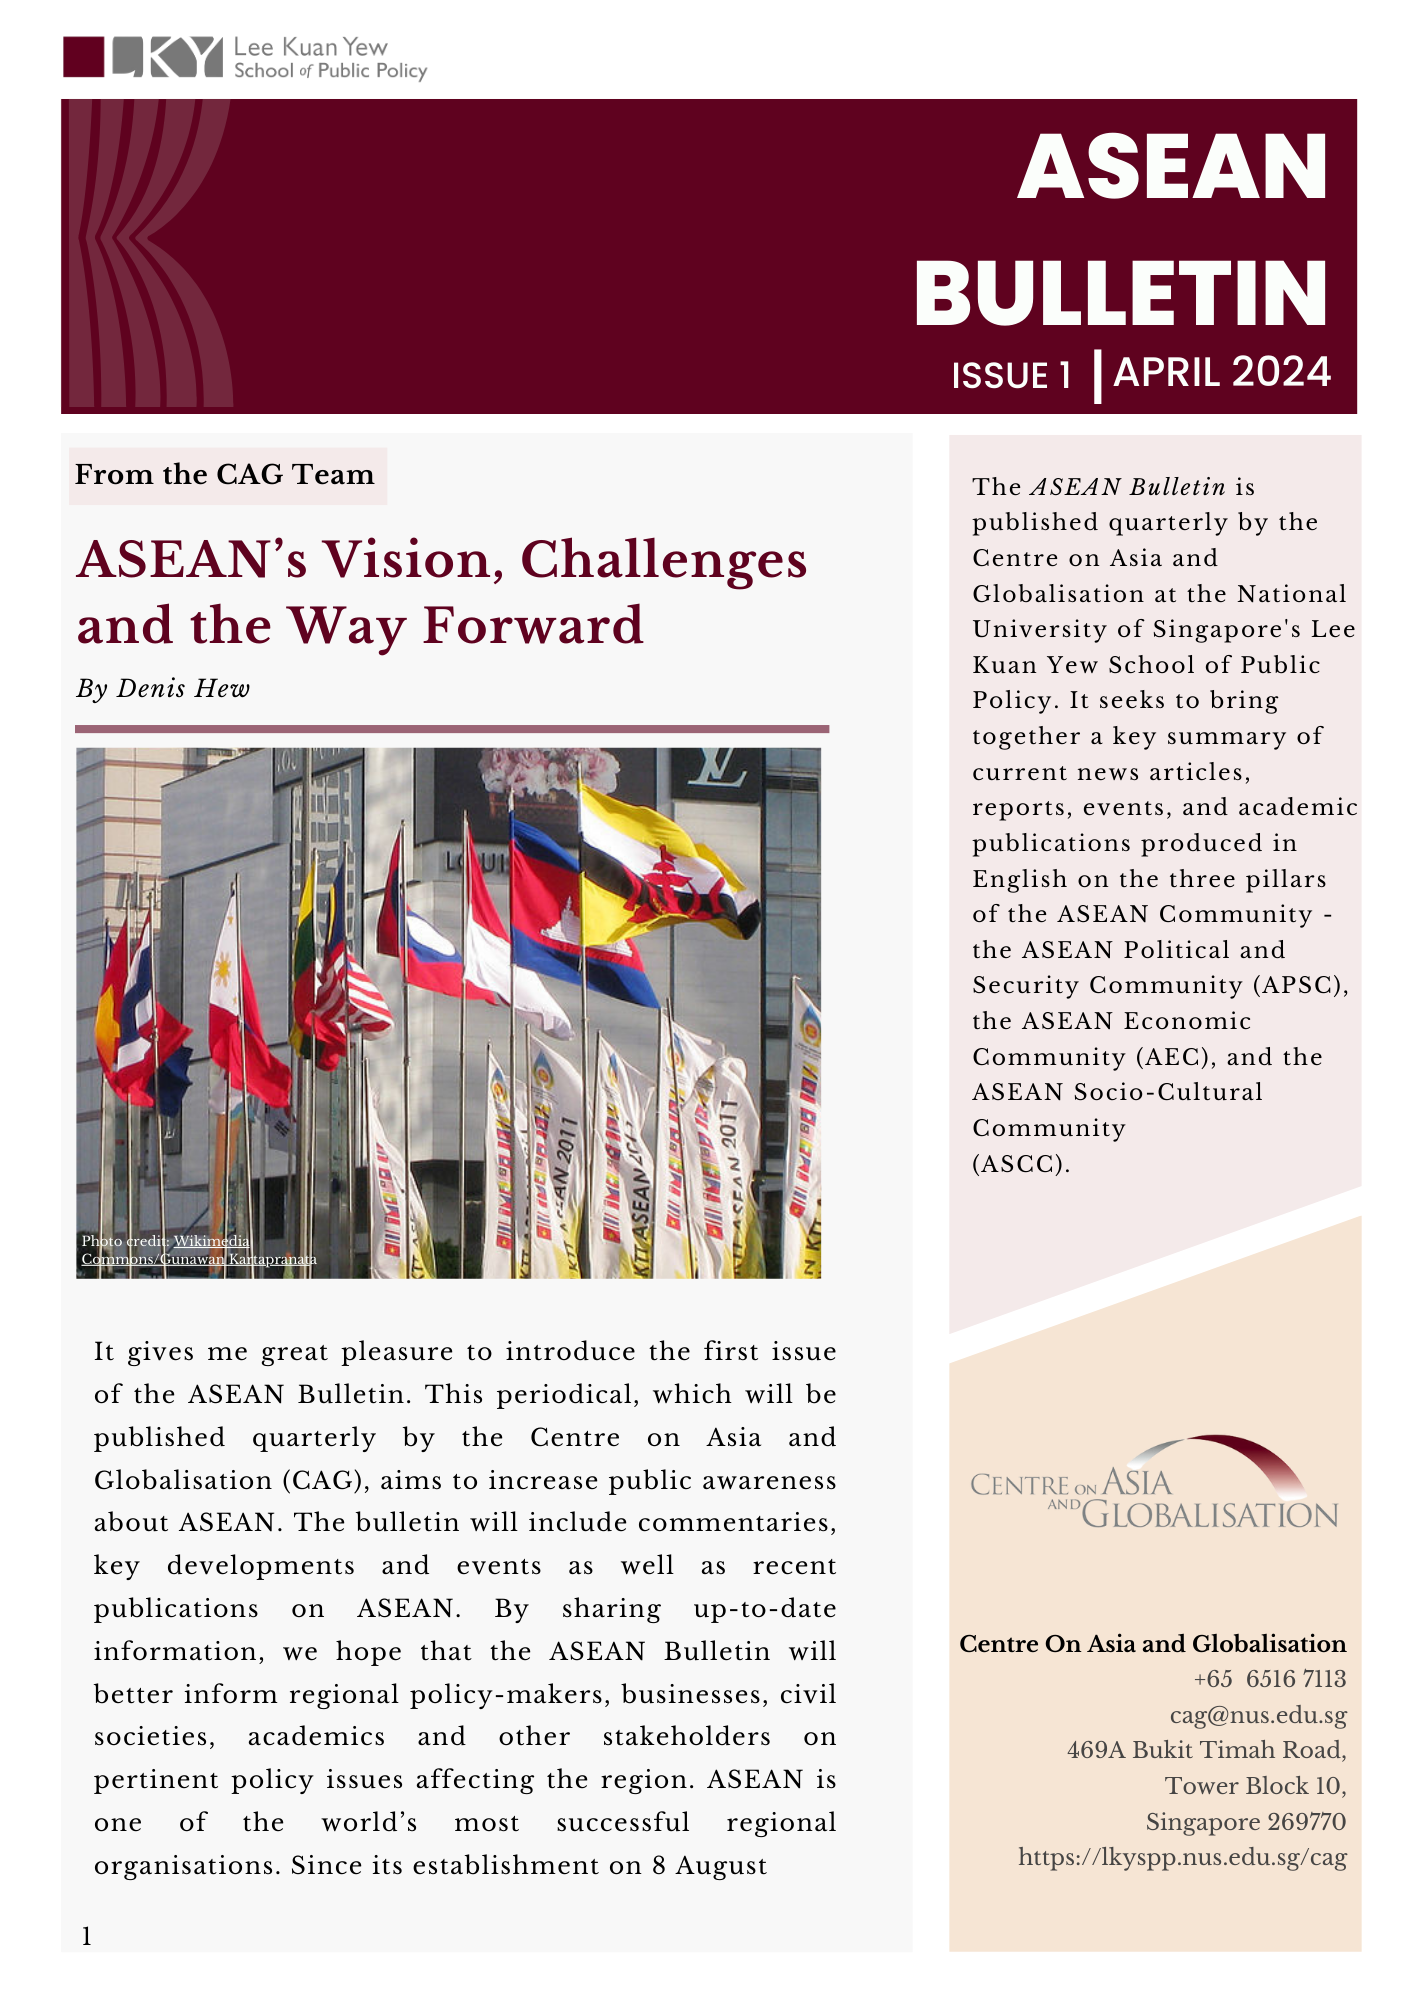 ASEAN Bulletin Issue 1